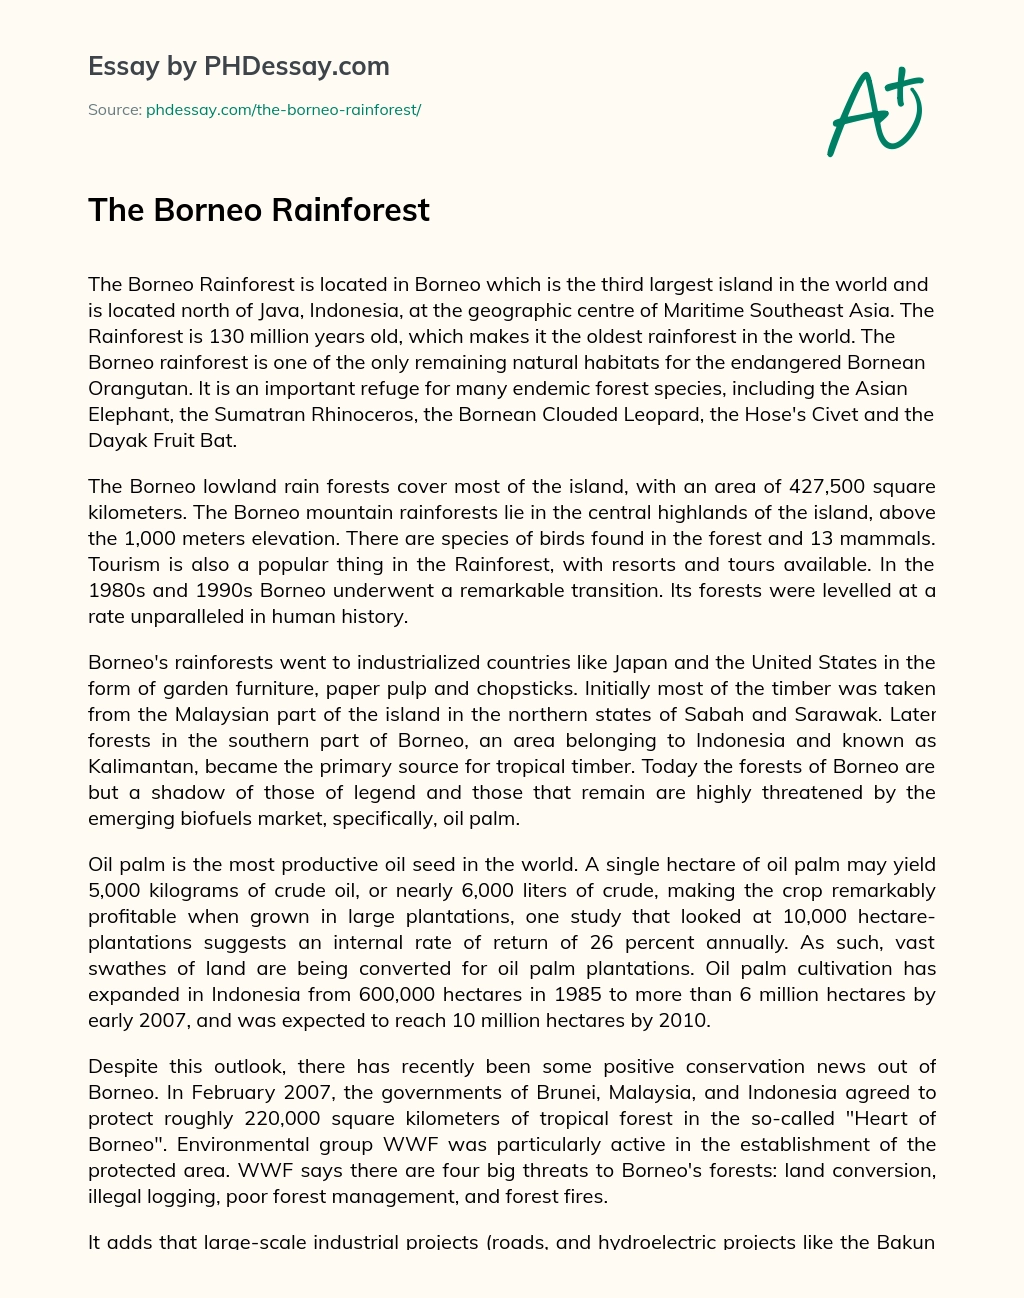 The Borneo Rainforest essay